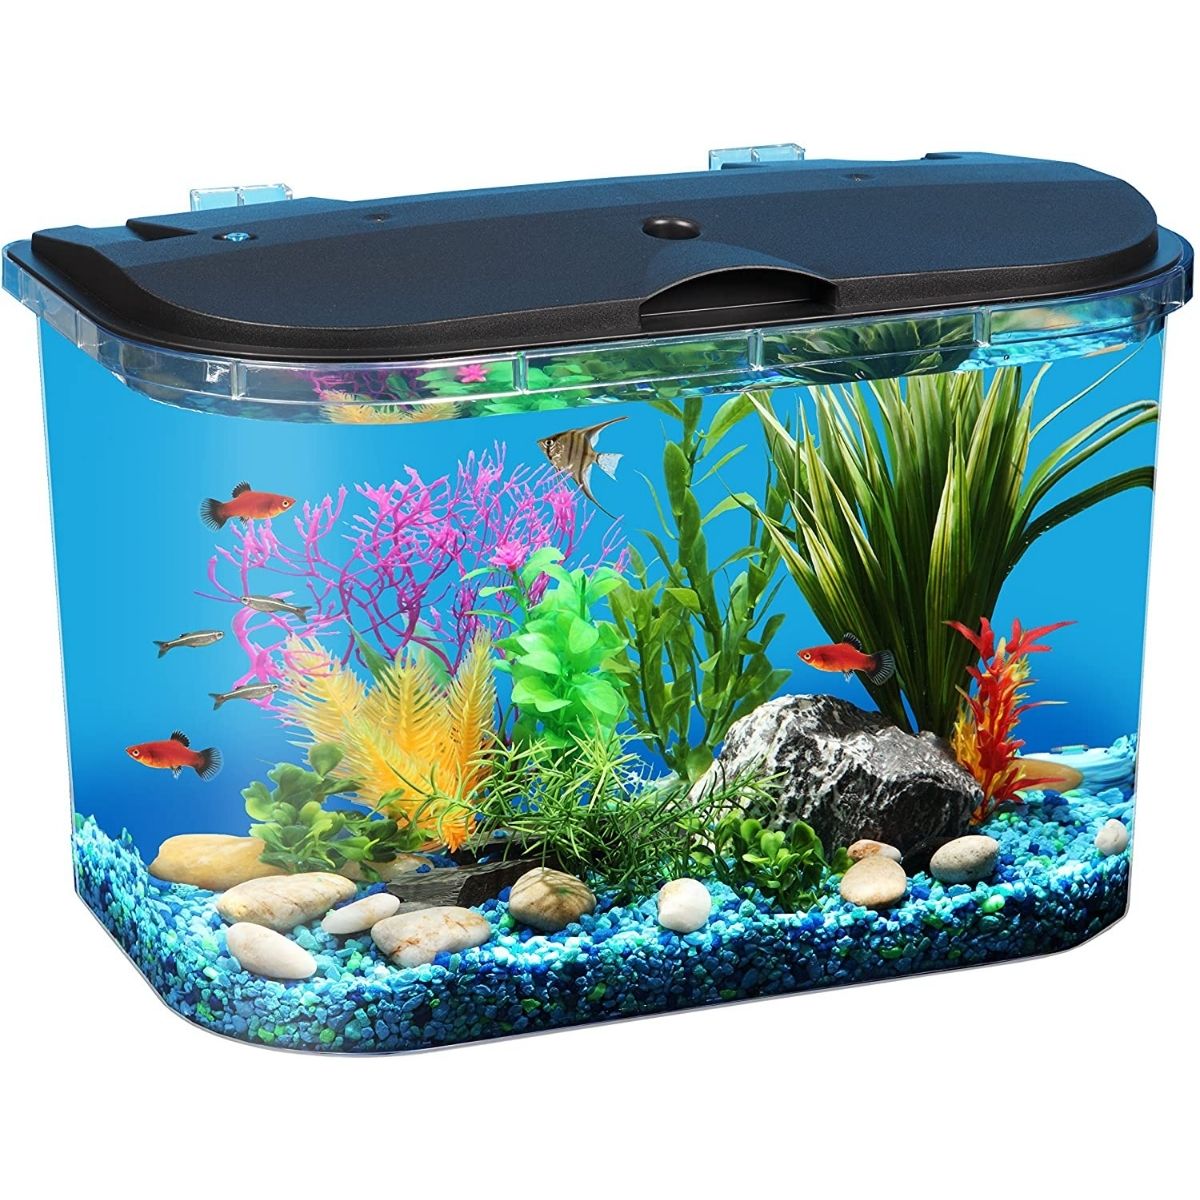 Best 5 Gallon Fish Tank Panaview 5-Gallon Aquarium Kit